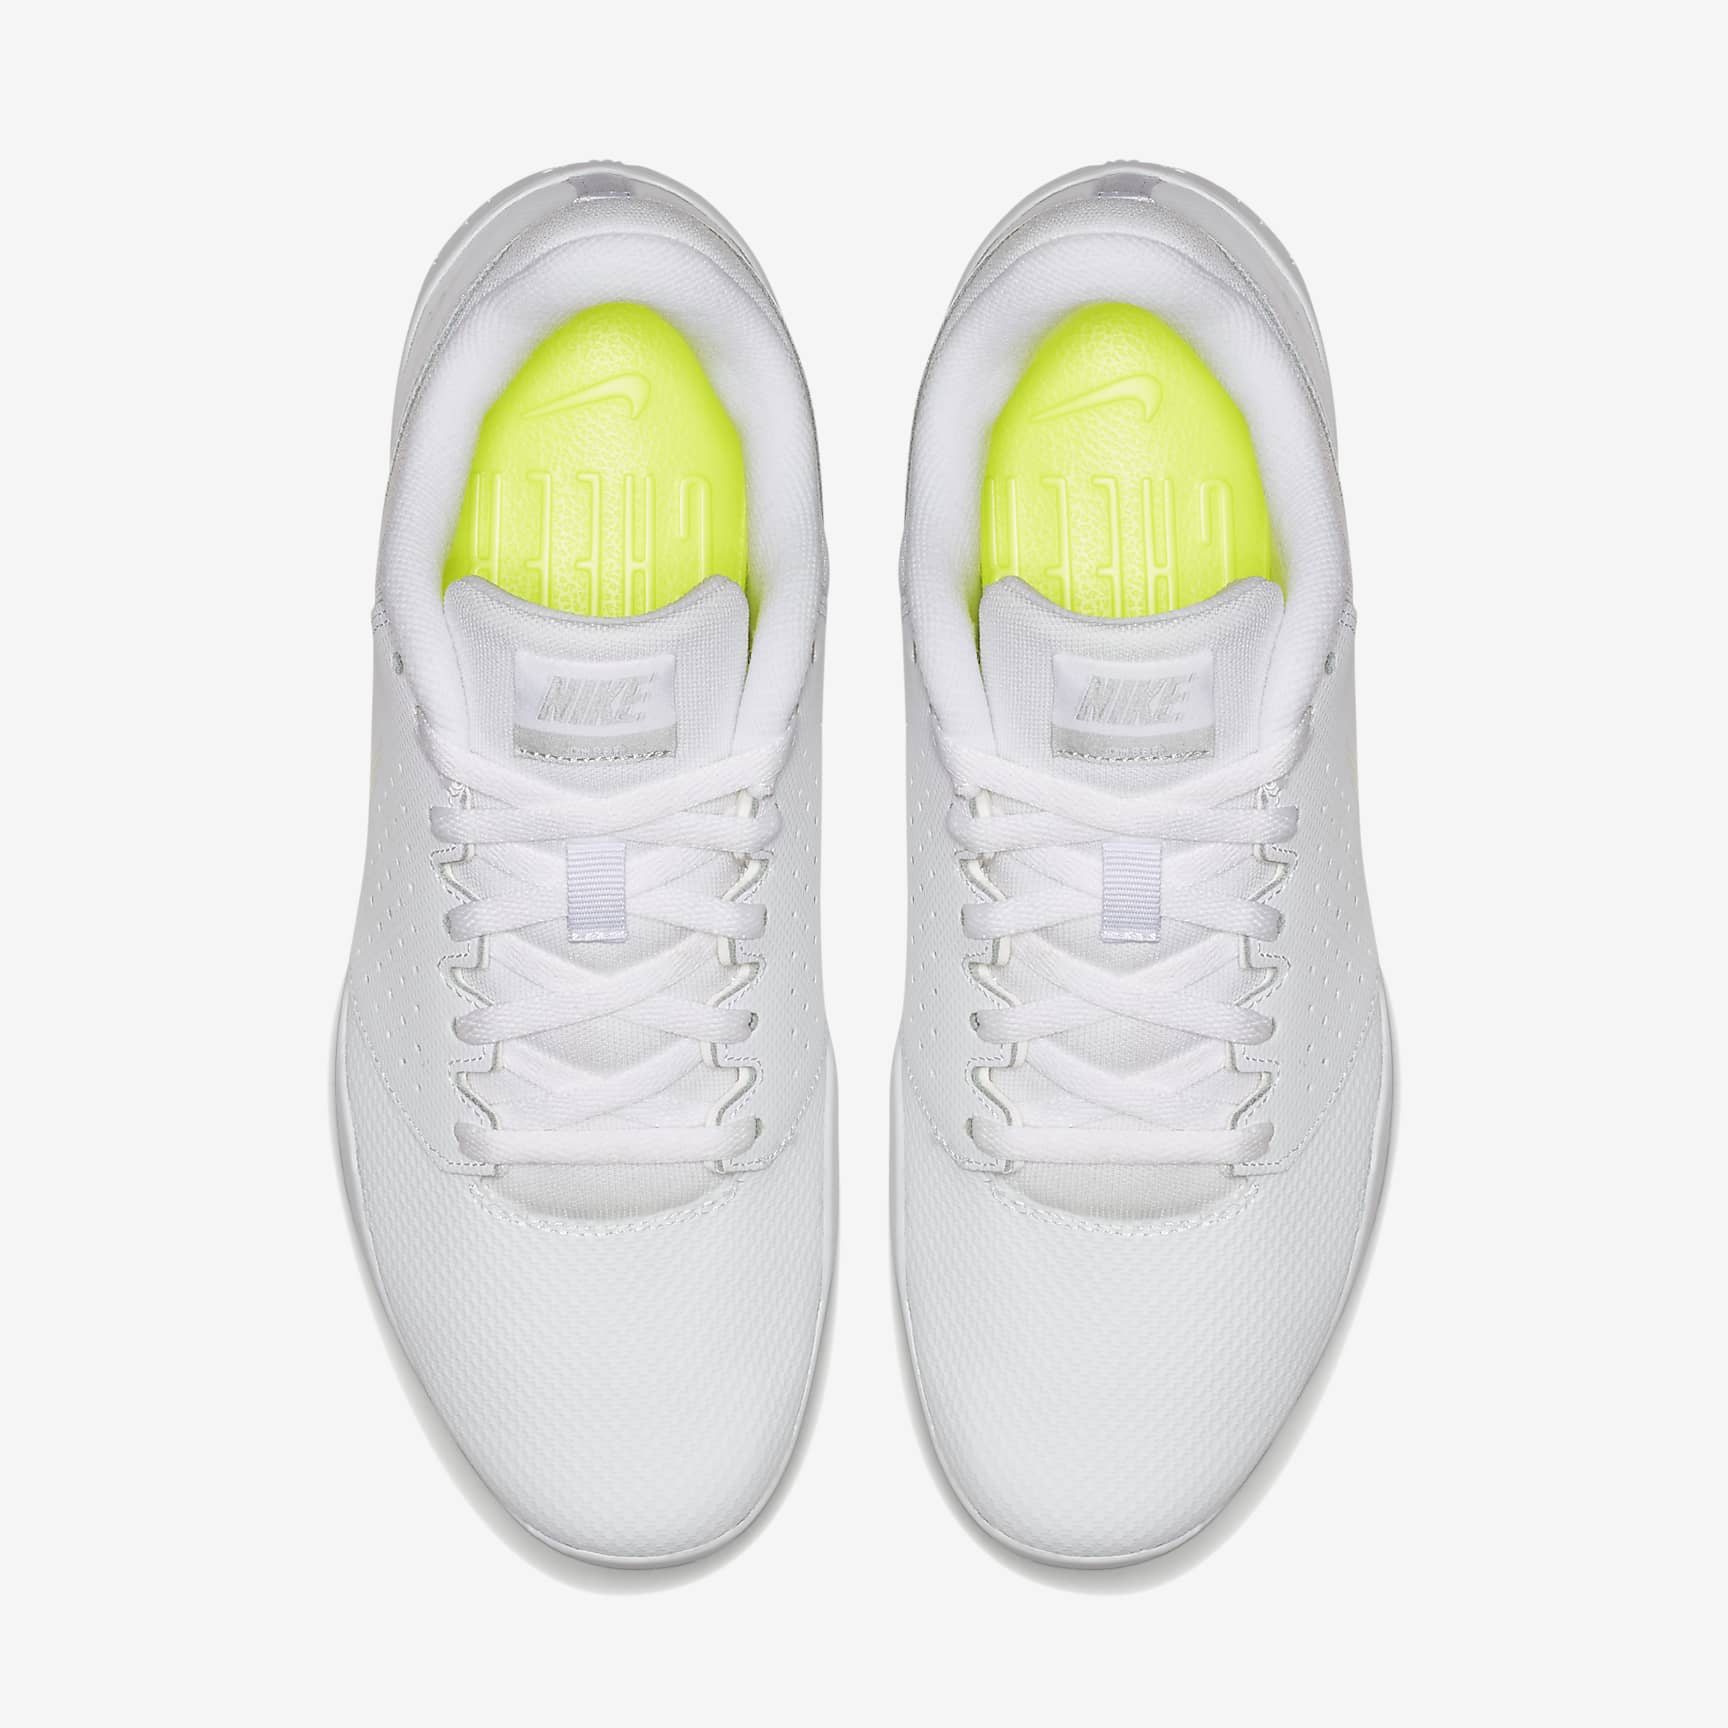 Nike Sideline IV Women's Cheerleading Shoe - White/White/Pure Platinum